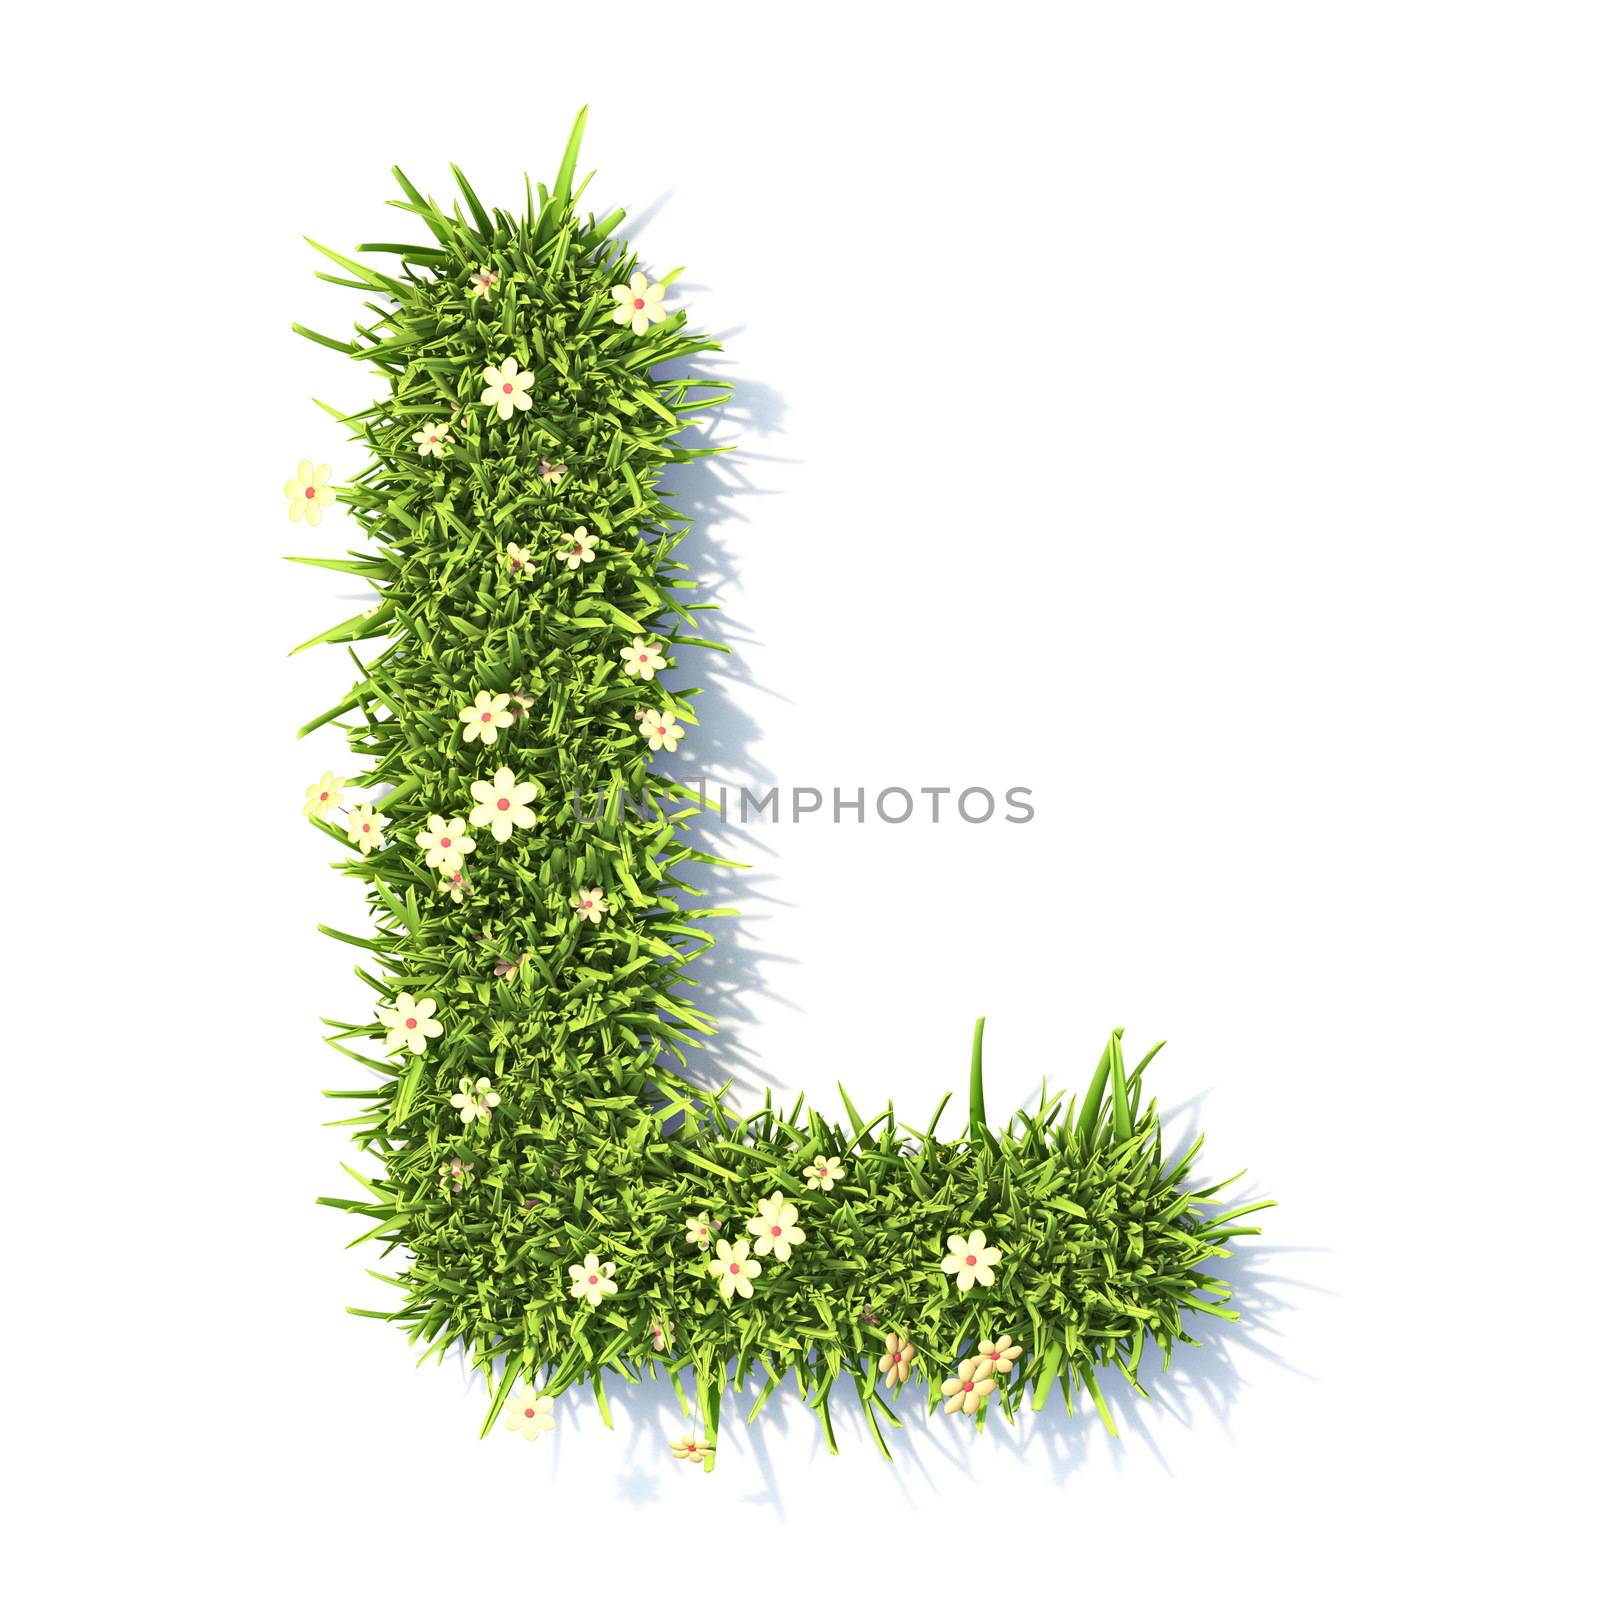 Grass font Letter L 3D rendering illustration isolated on white background